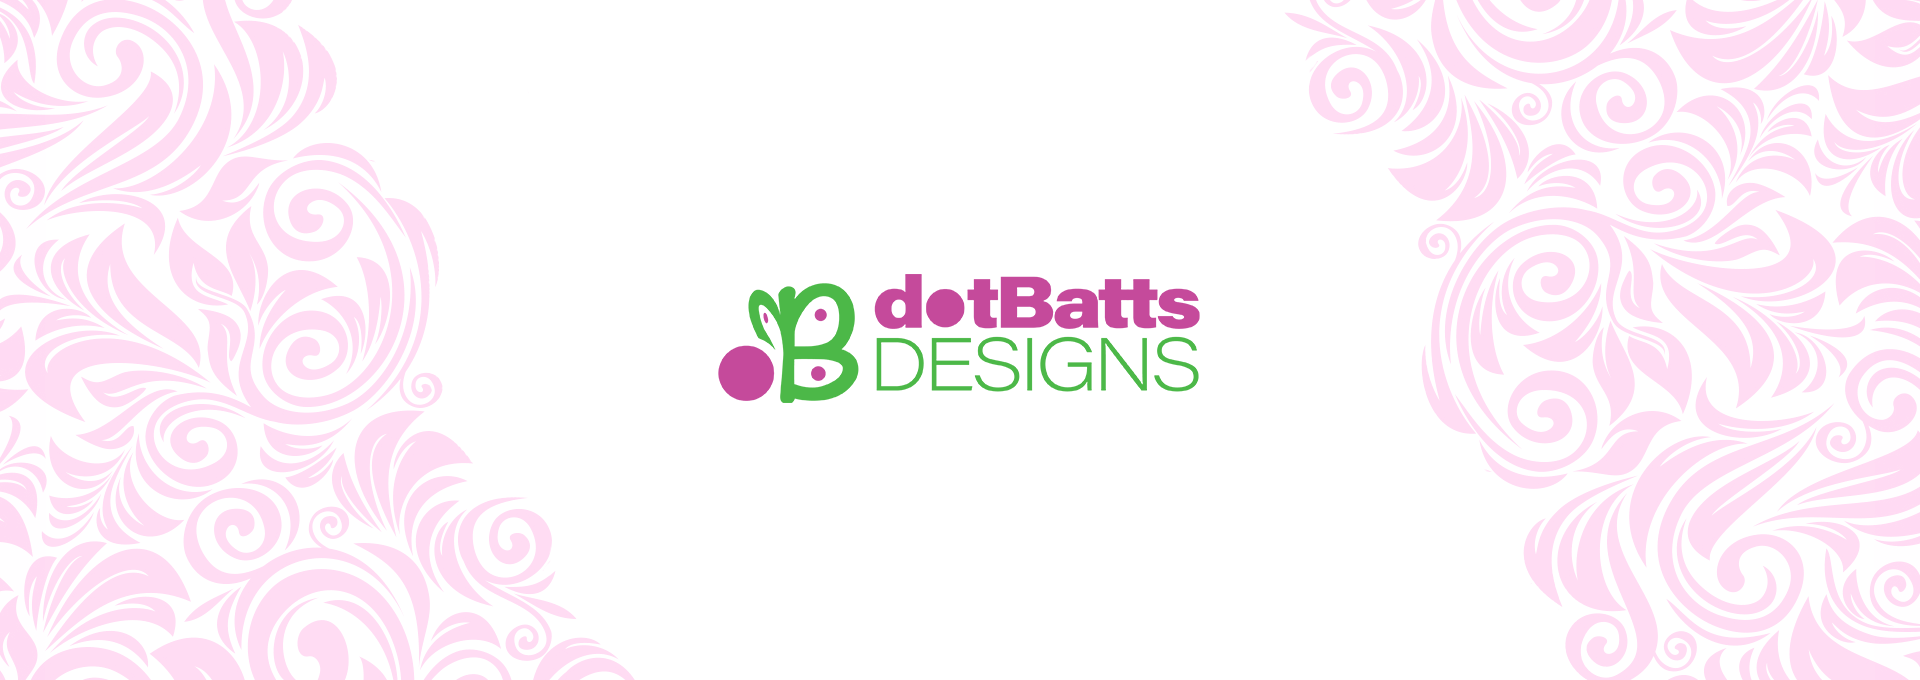 dotBatts Designs